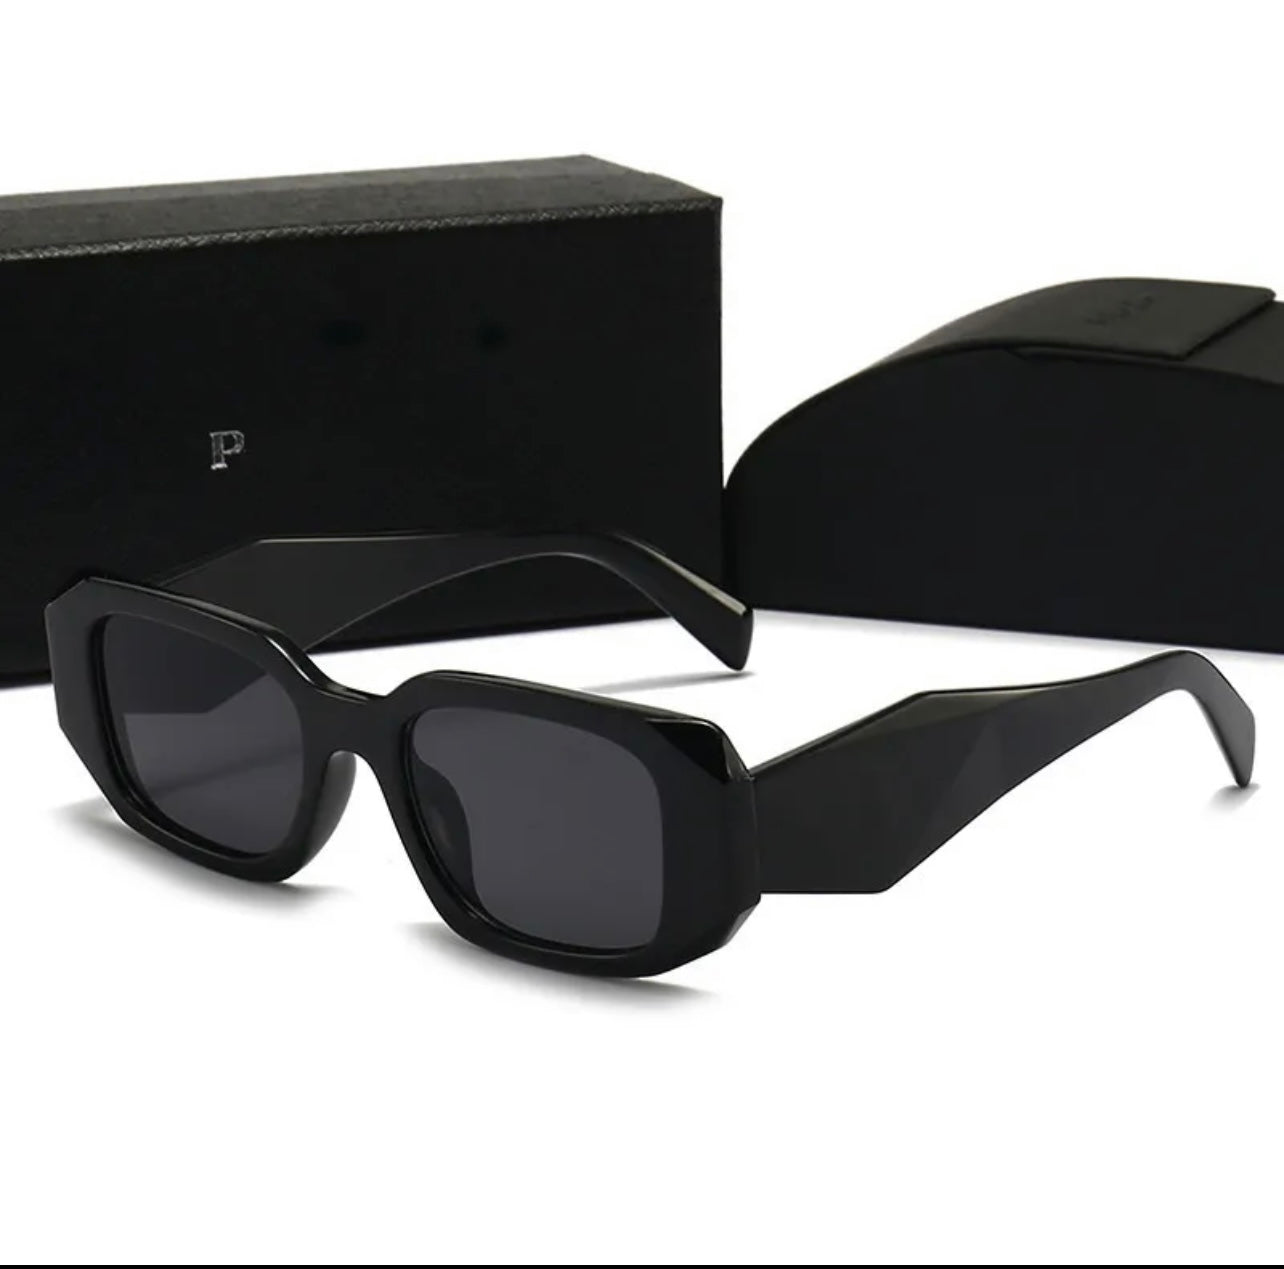 Pr inspired sunglasses